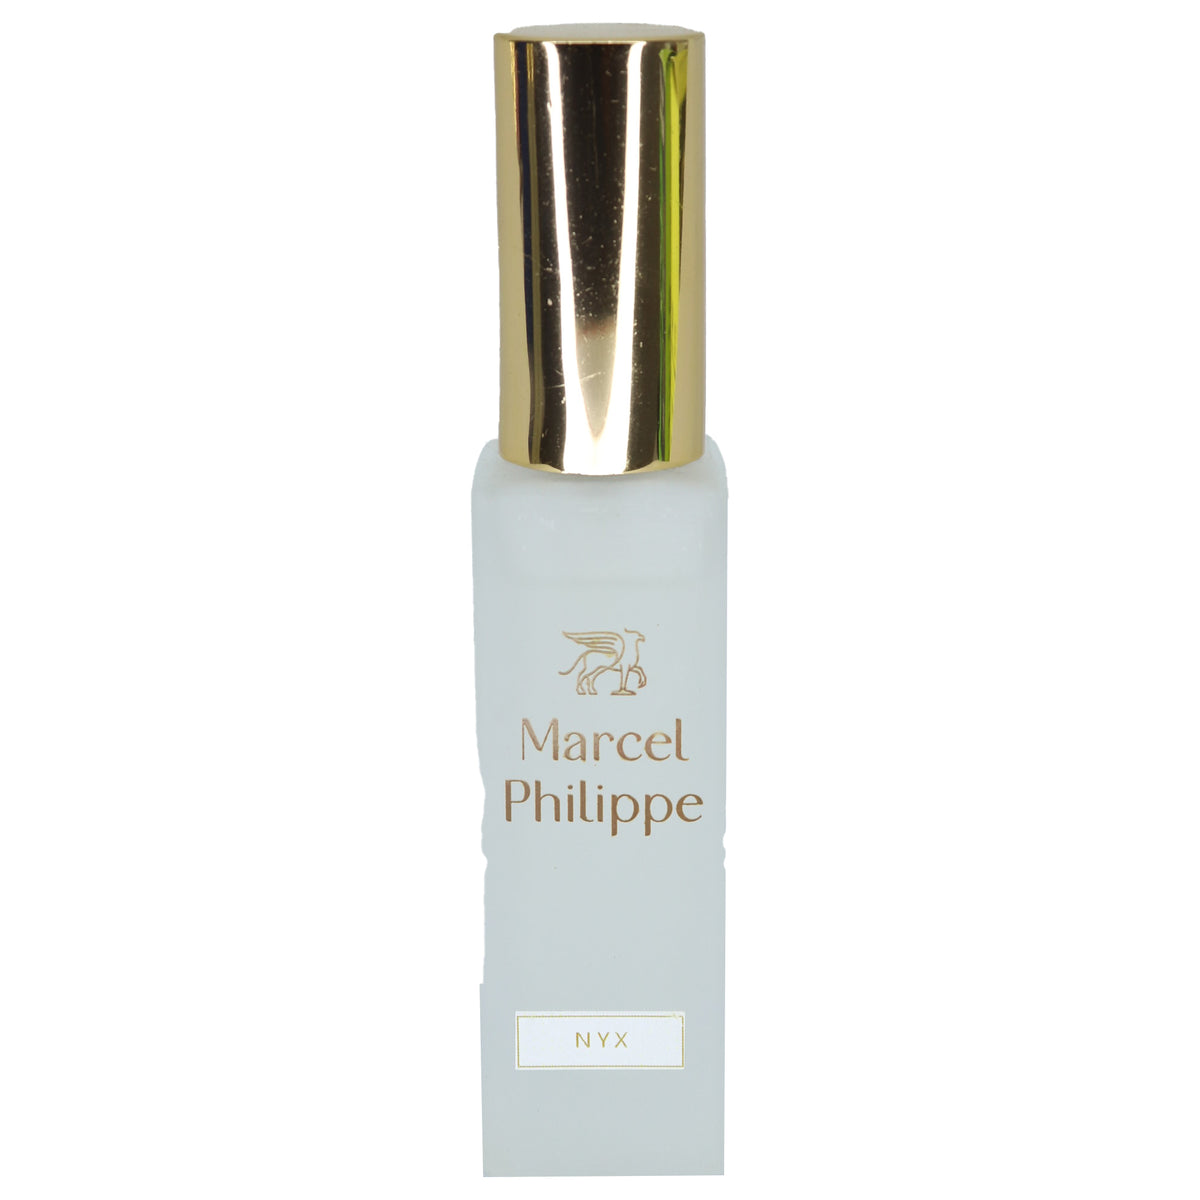 Marcel Philippe Perfume 30 ml